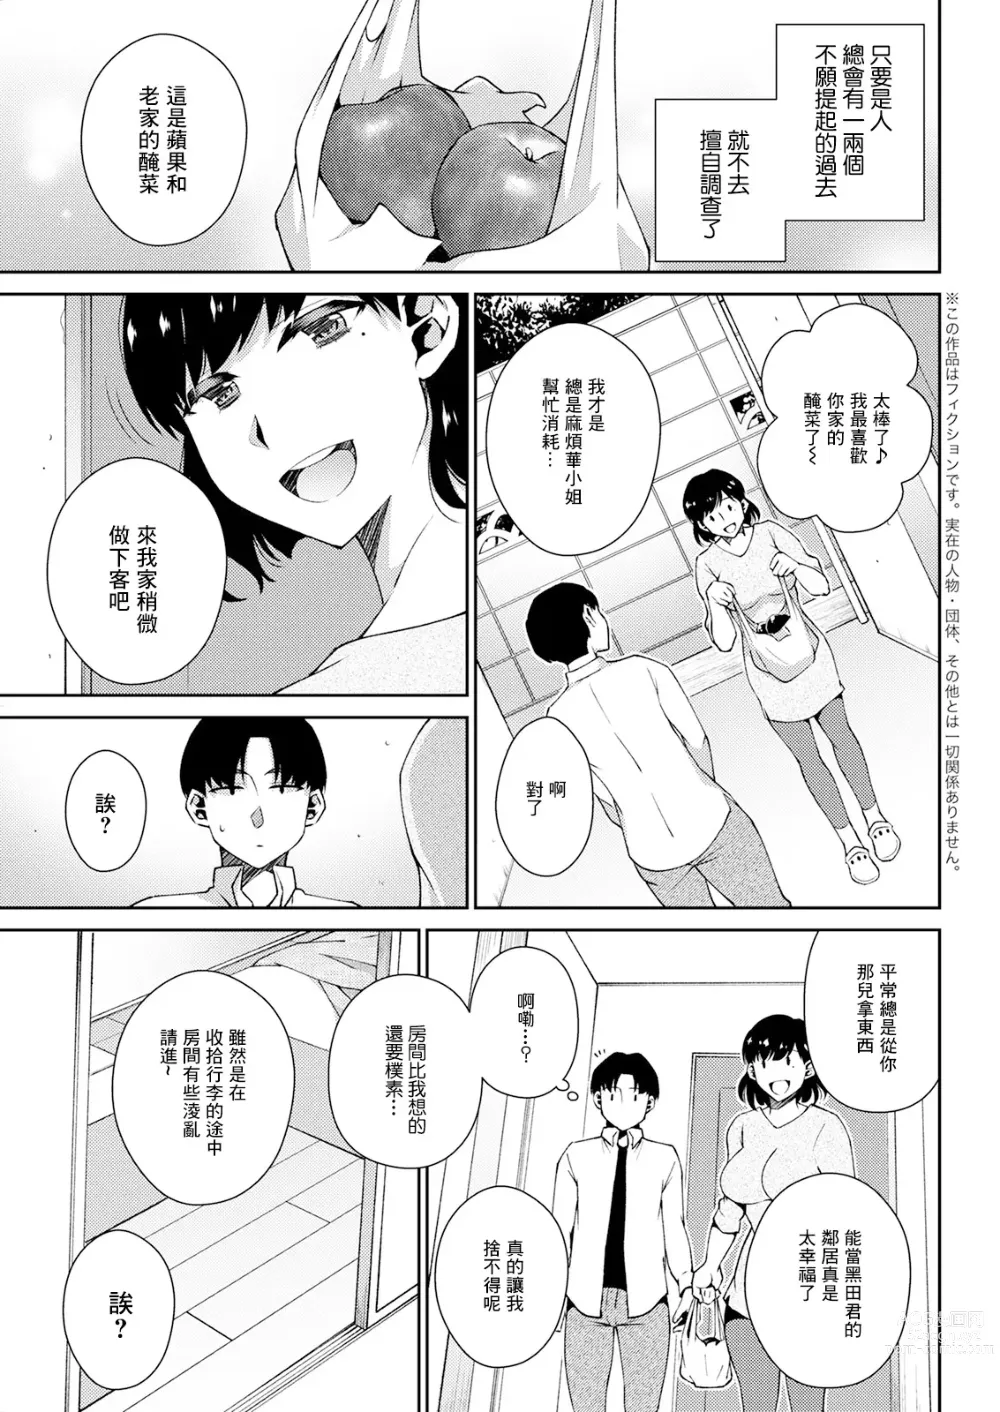 Page 3 of manga Hisureba Rinjin